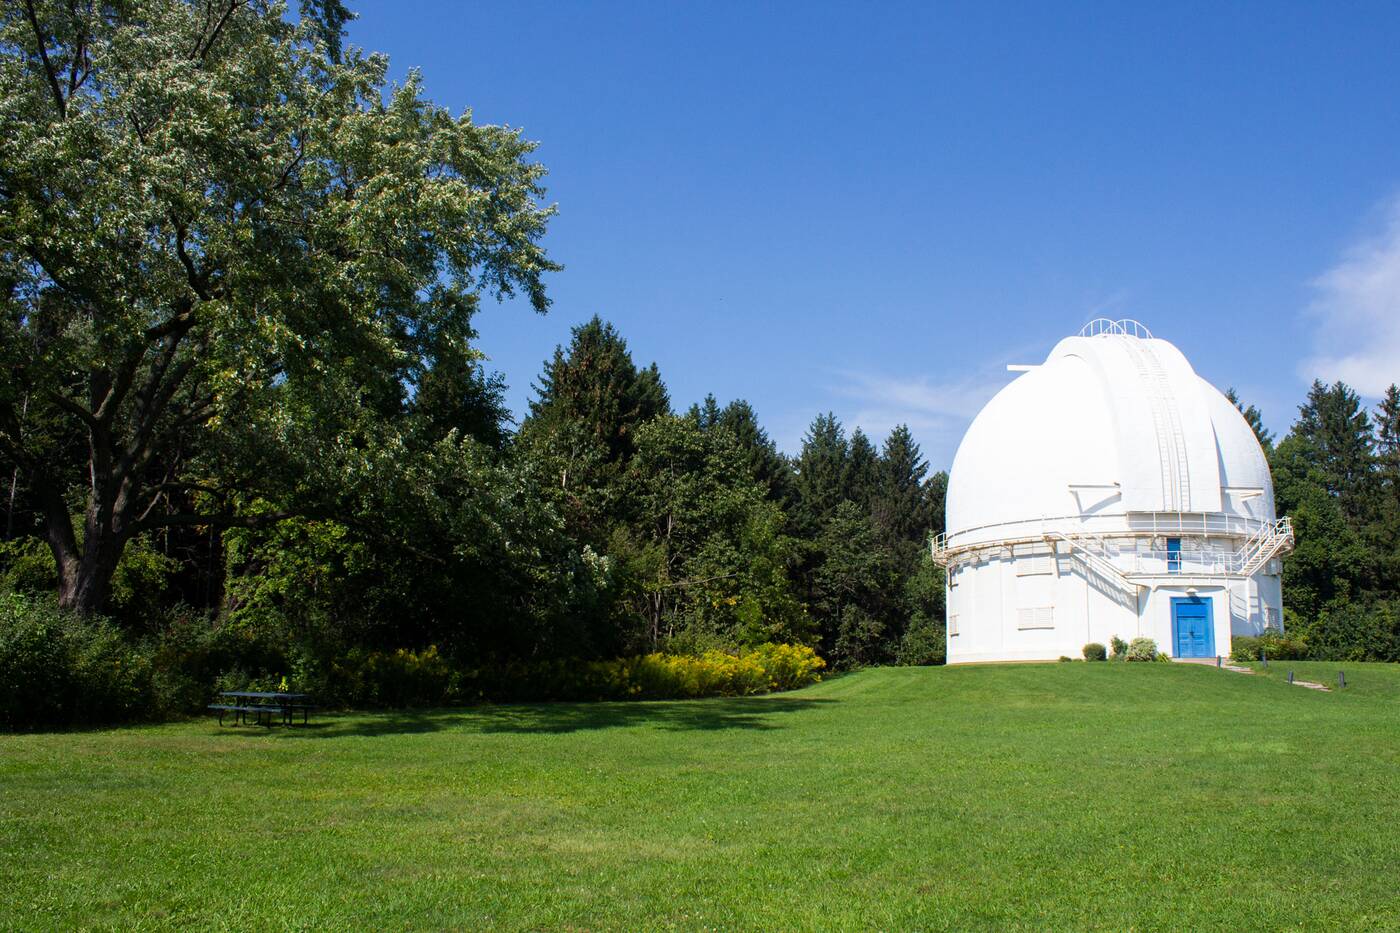 David Dunlap Observatory is Toronto's hidden pathway to the stars